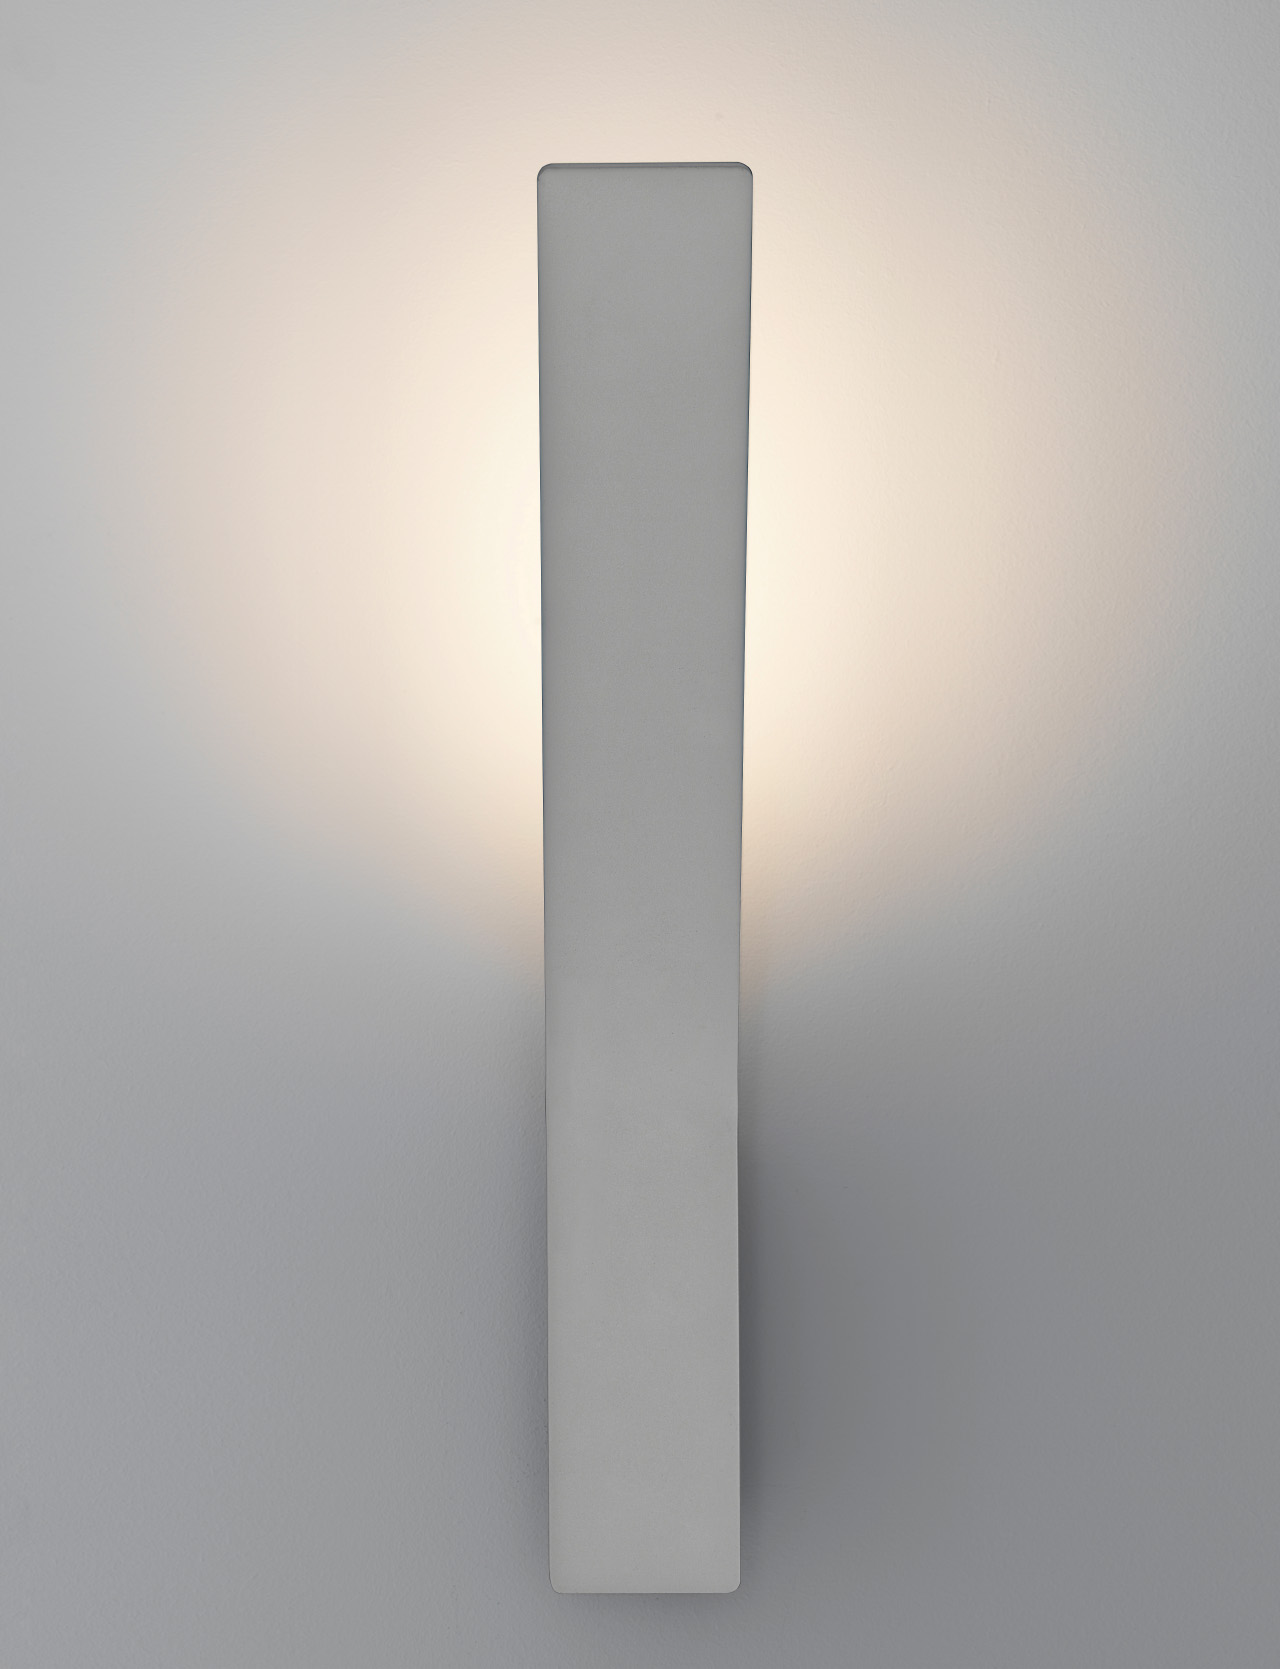 Lama-Lampe für Wand/Decke